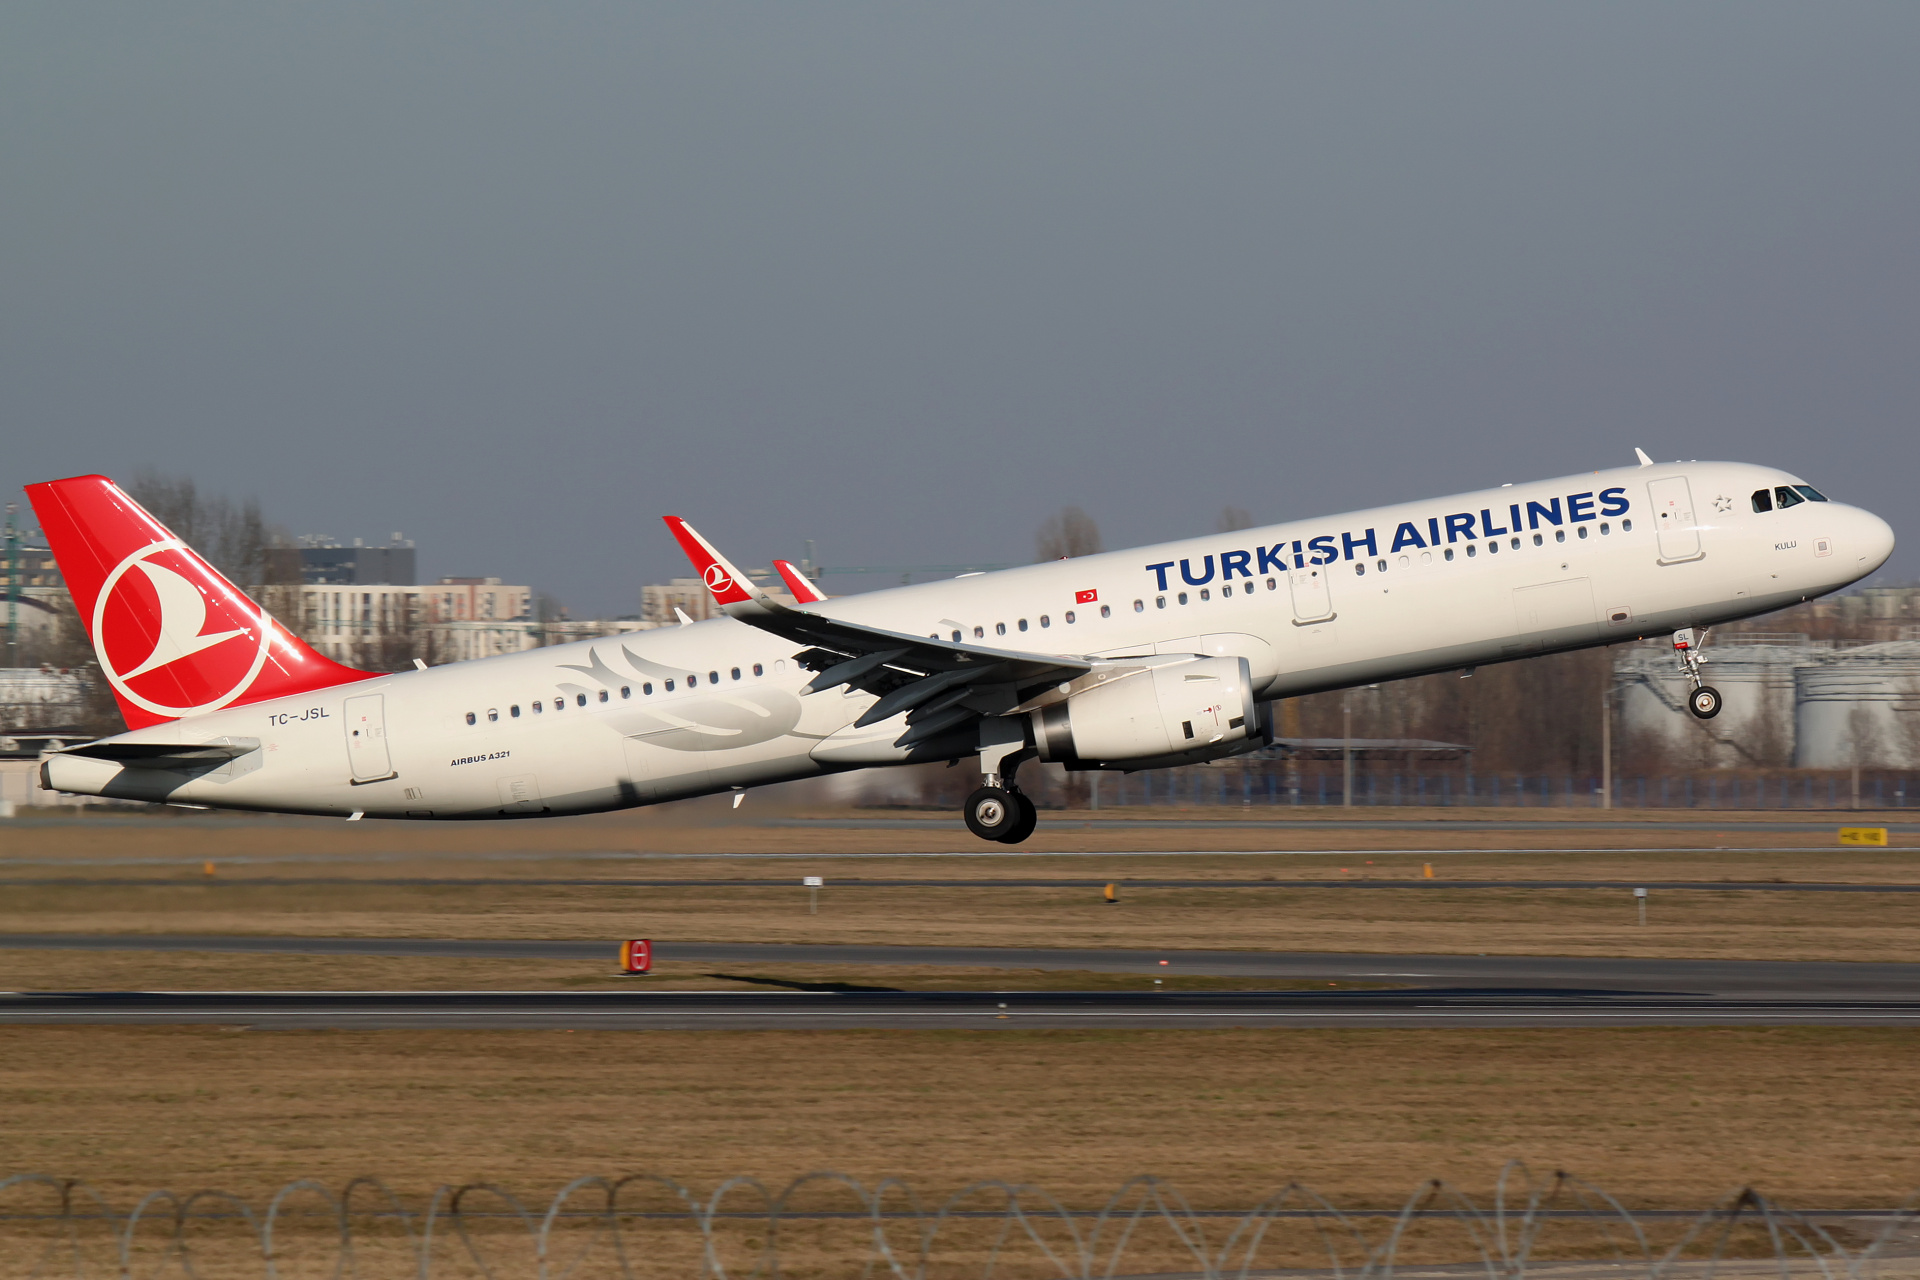 TC-JSL (Aircraft » EPWA Spotting » Airbus A321-200 » THY Turkish Airlines)